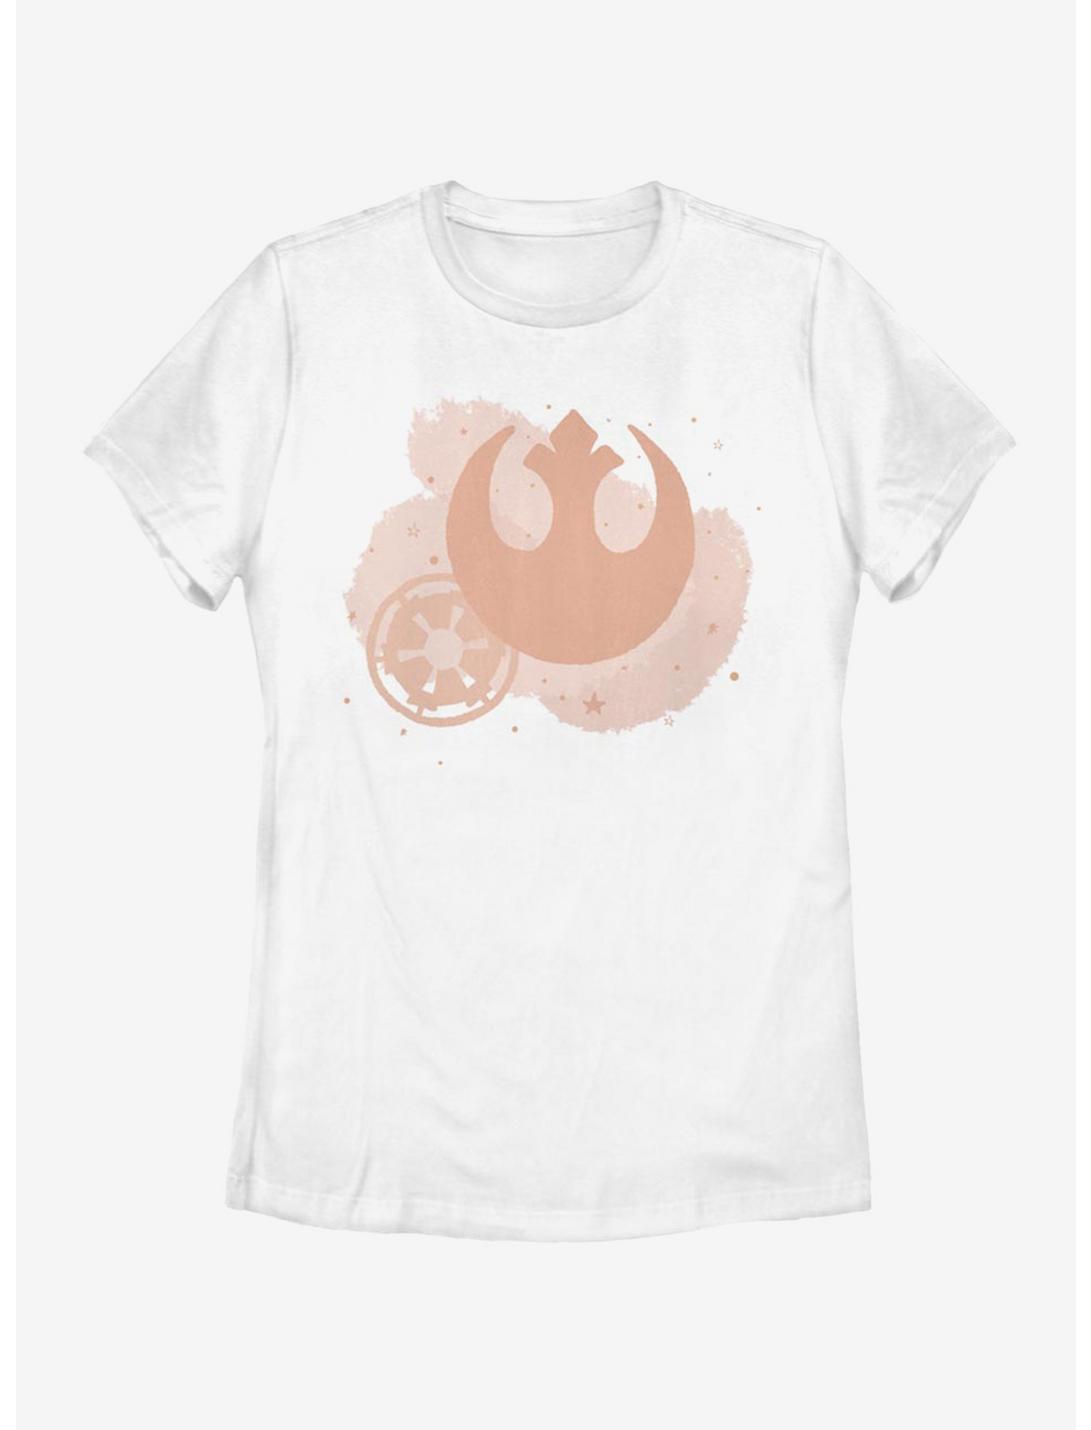 Star Wars Minimal Brush Logos Womens T-Shirt, WHITE, hi-res